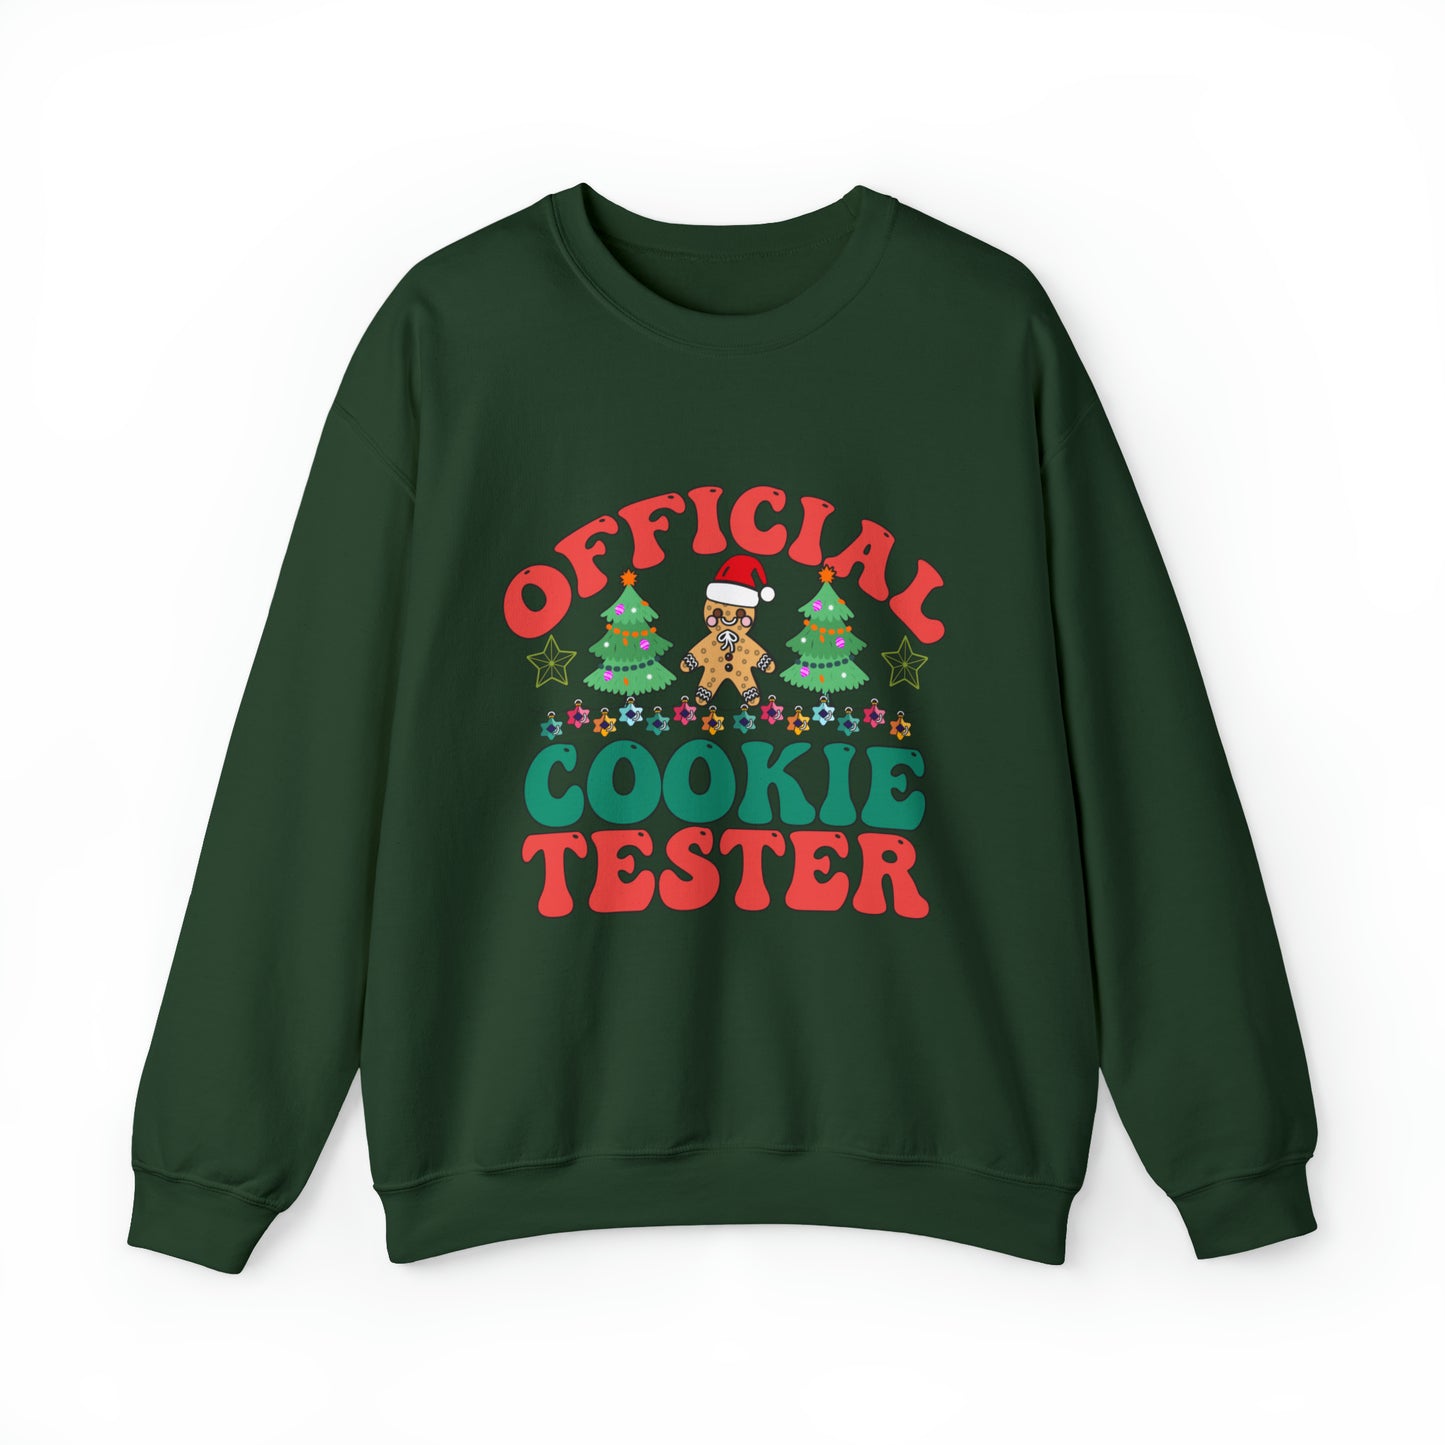 Official Cookie Tester Christmas Crewneck Adult Unisex Sweatshirt